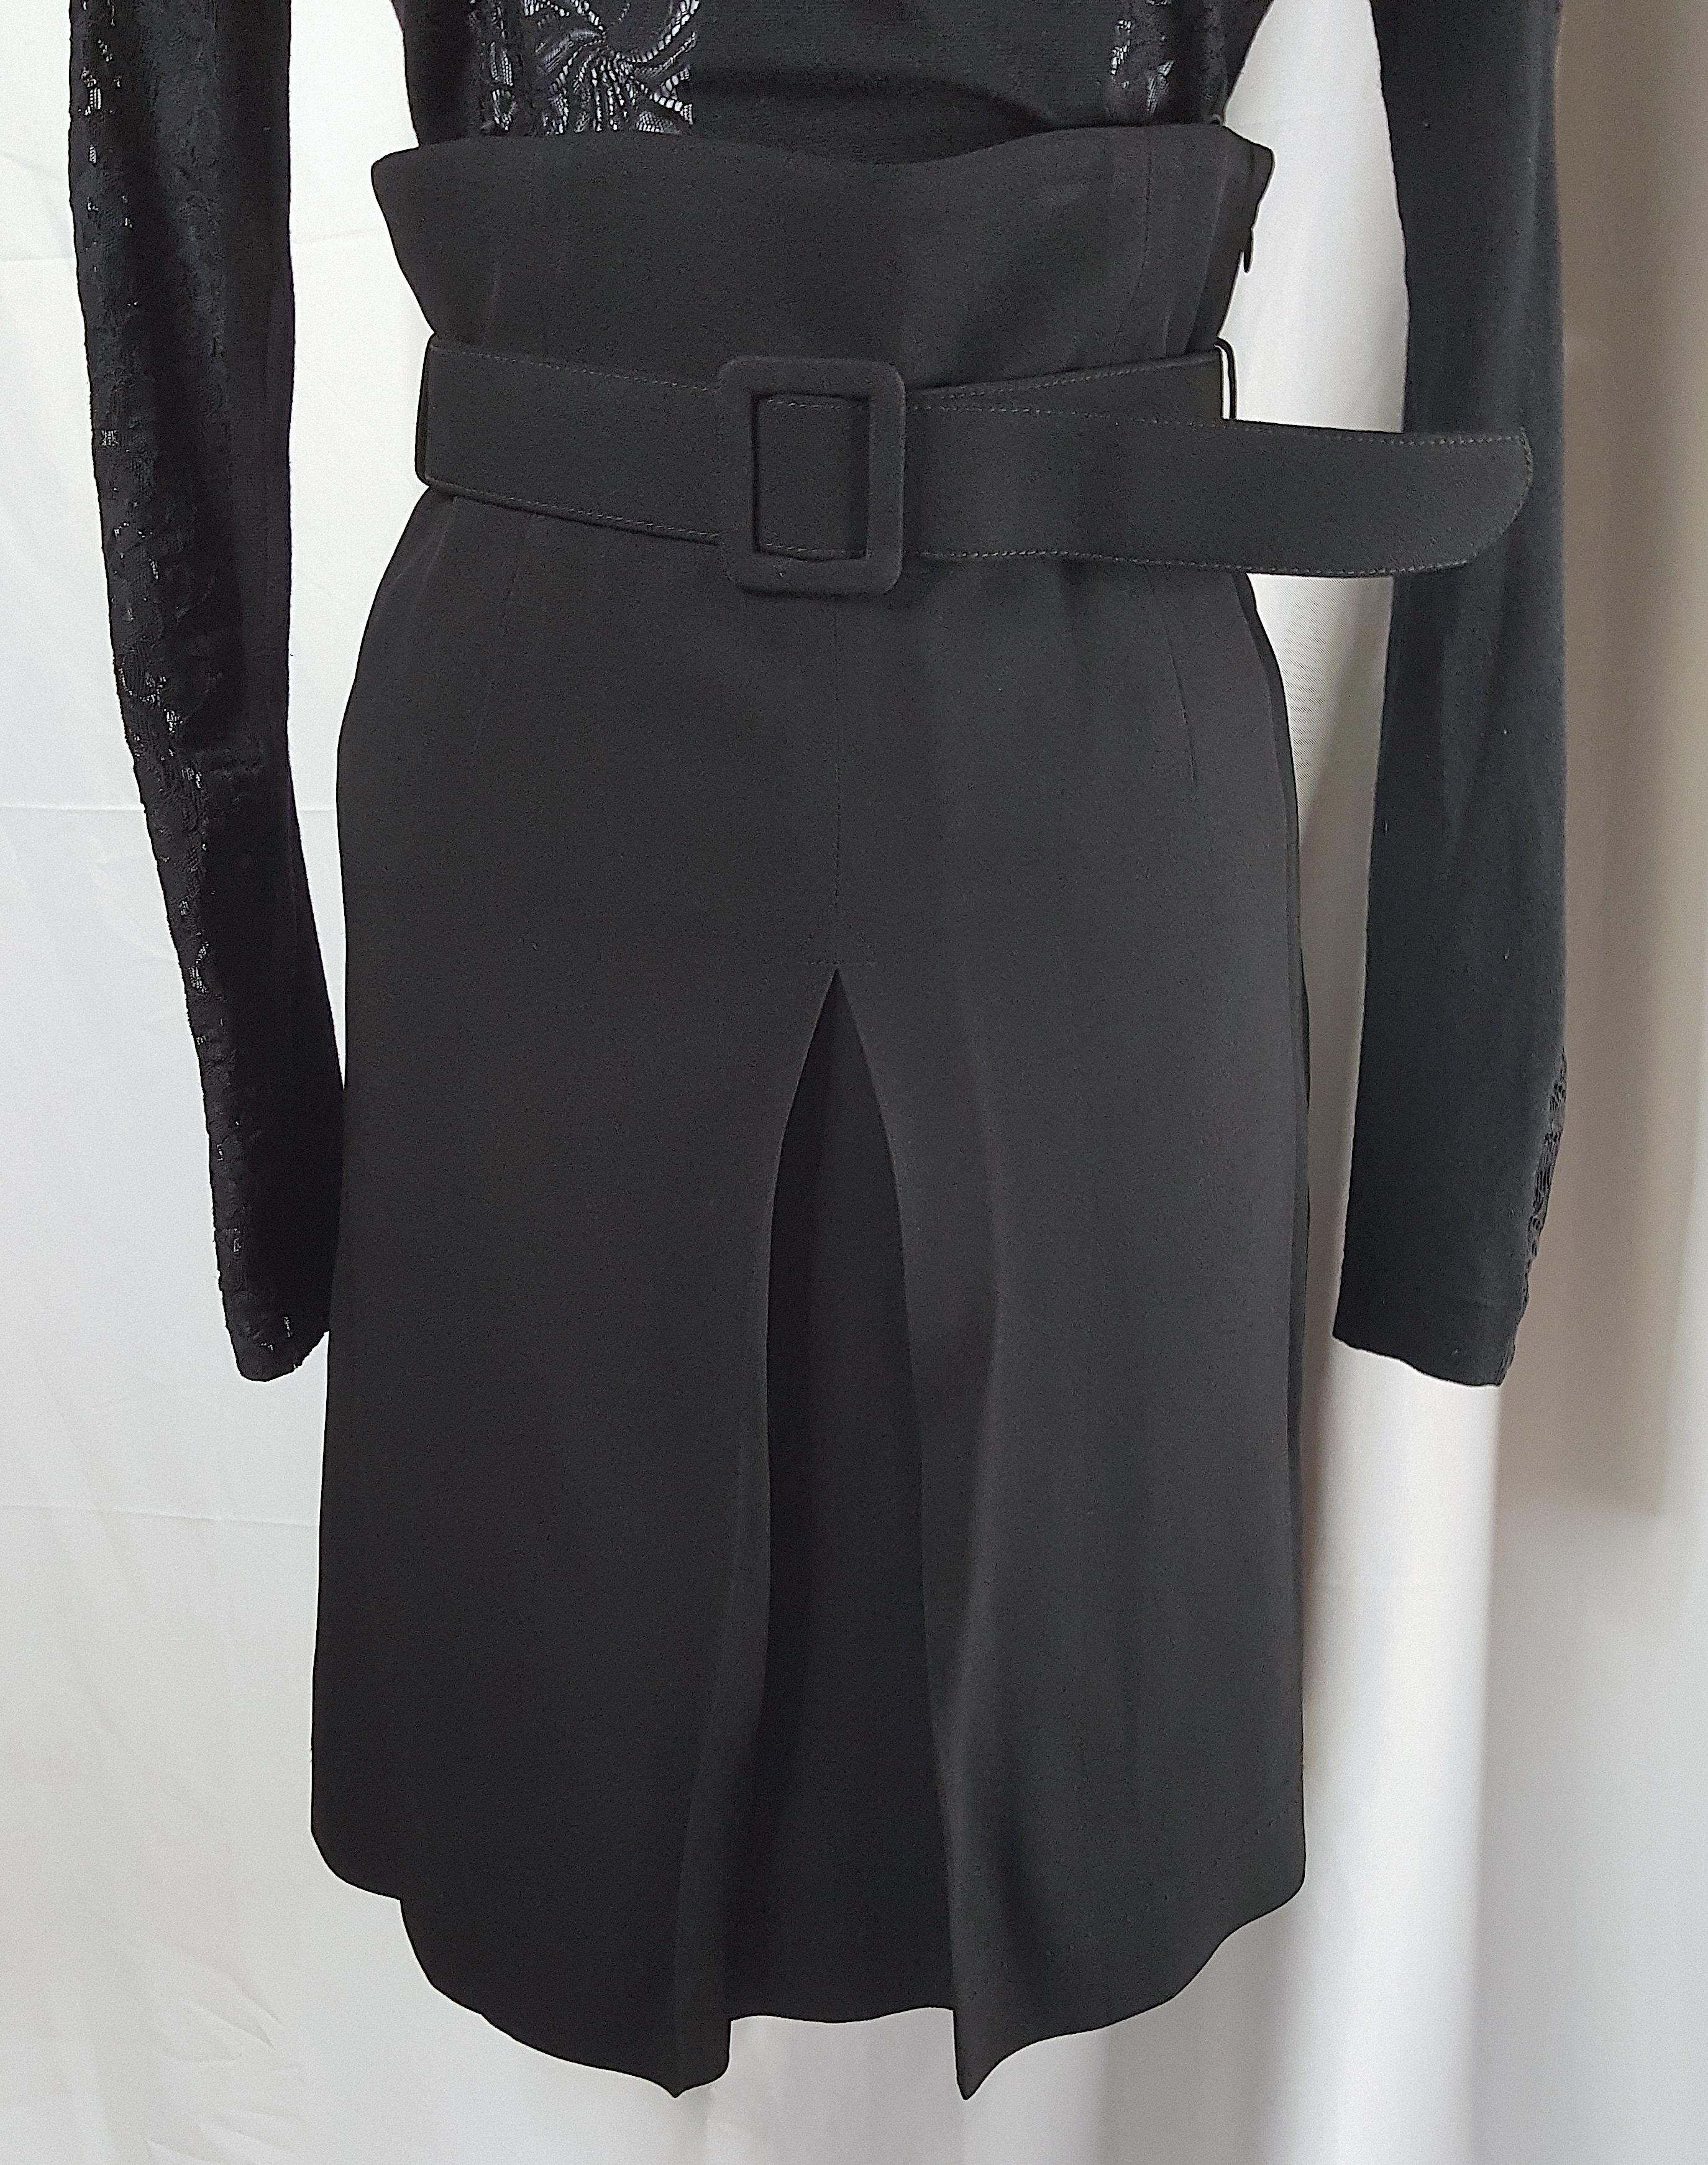 Dolce&Gabbana 1995 Lace CutWork Black Ensemble WoolKnitTurtleneck Belt & Skirt For Sale 7